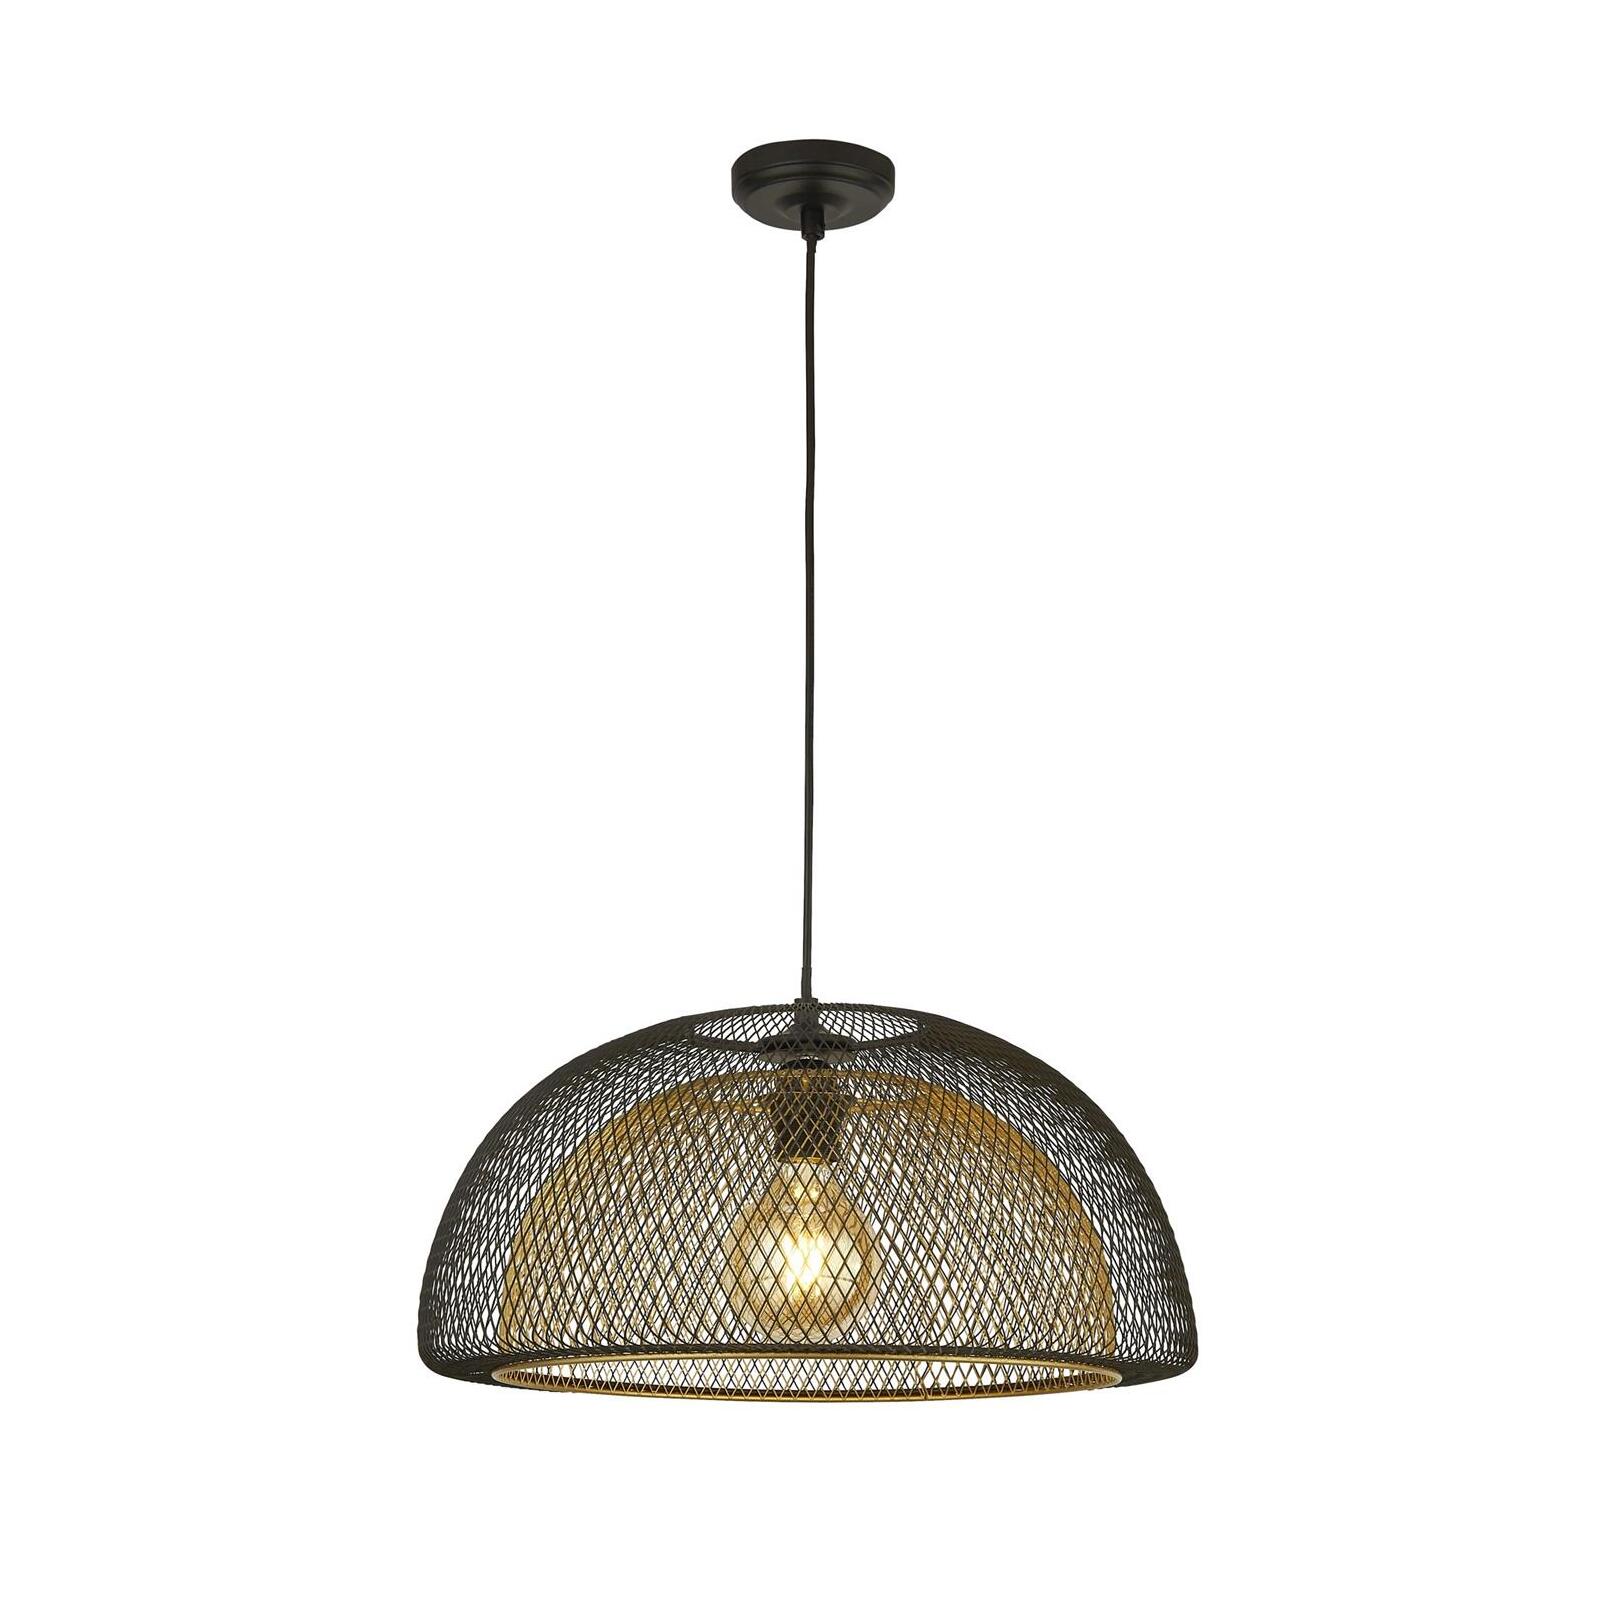 Honeycomb Pendelleuchte 45,5cm Leuchten mit Metall Lampen Doppelschirm gold - Gitter & schwarz E27 Onlineshop